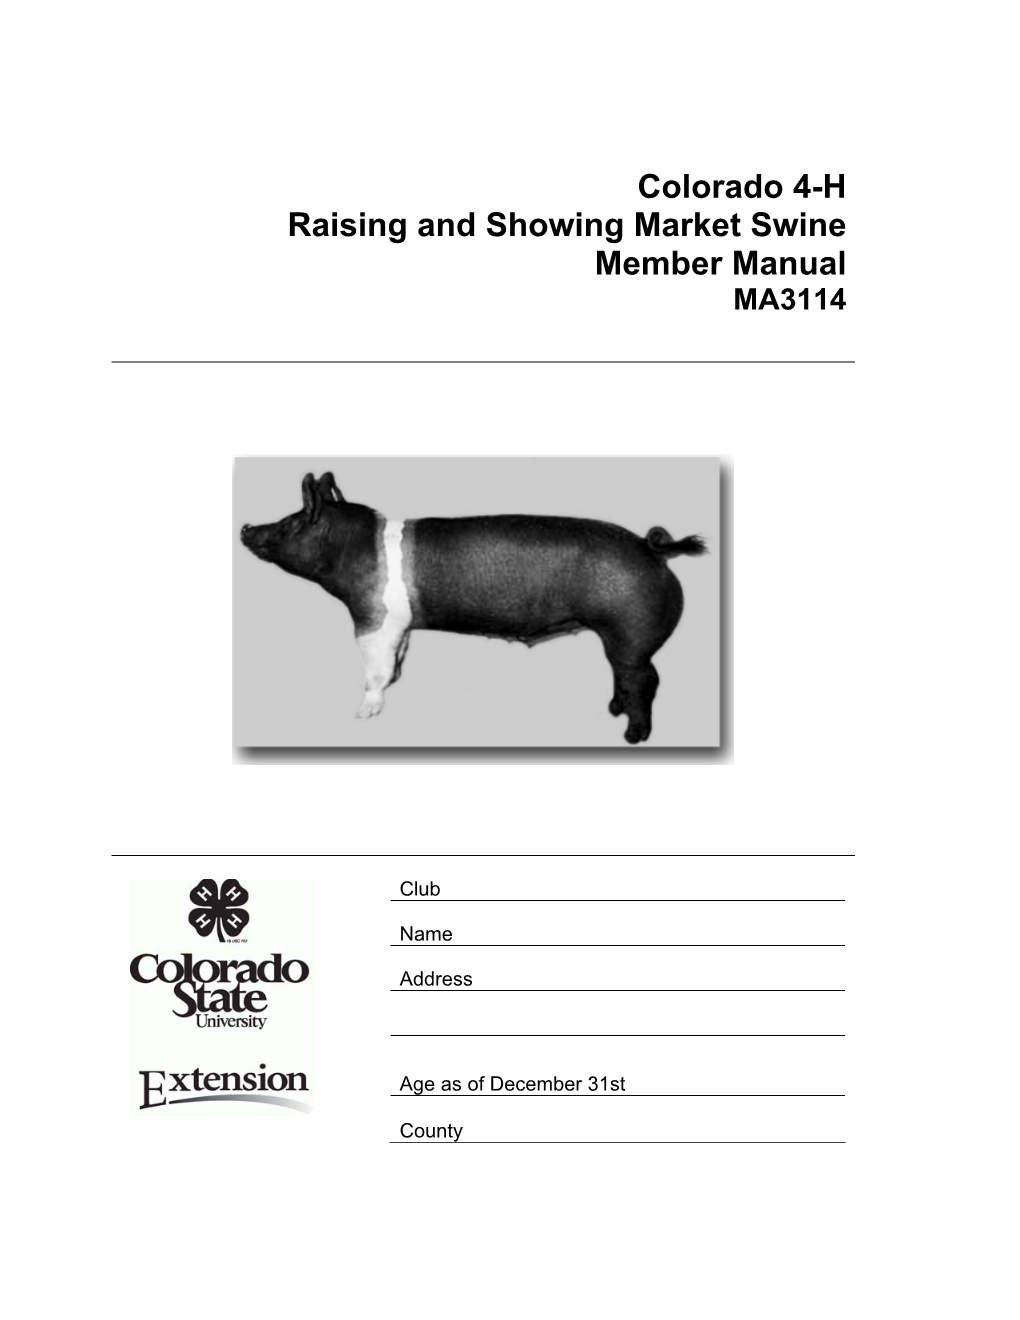 Colorado 4-H Raising and Showing Market Swine Member Manual MA3114